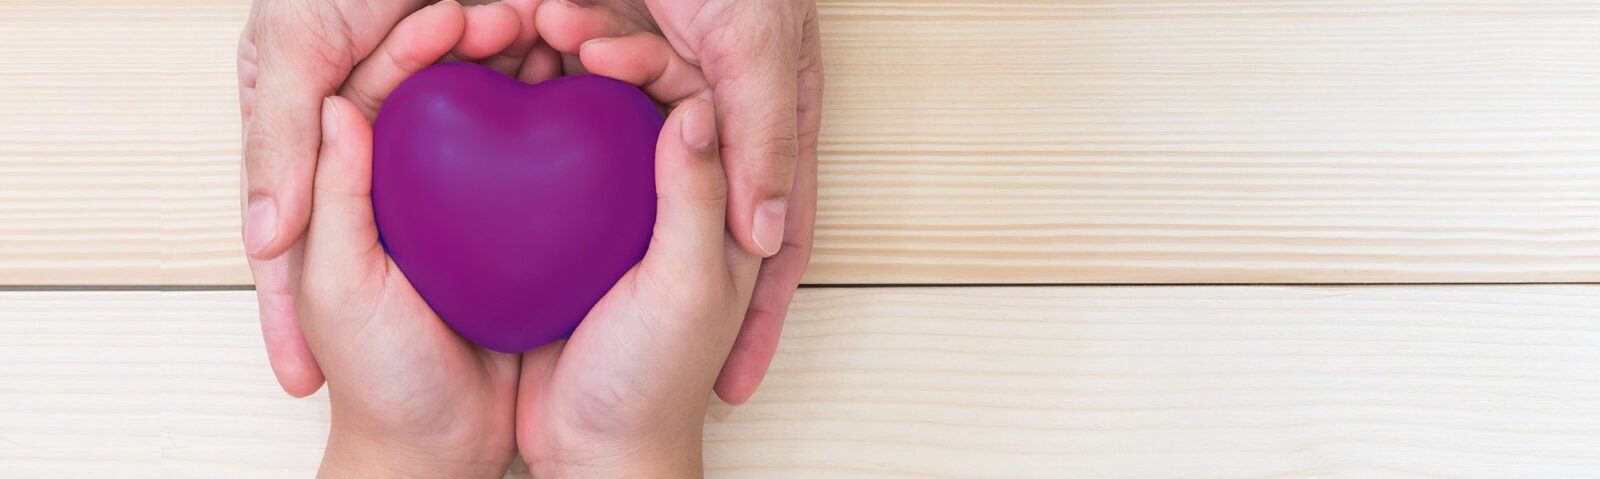 Hands holding purple heart shaped object